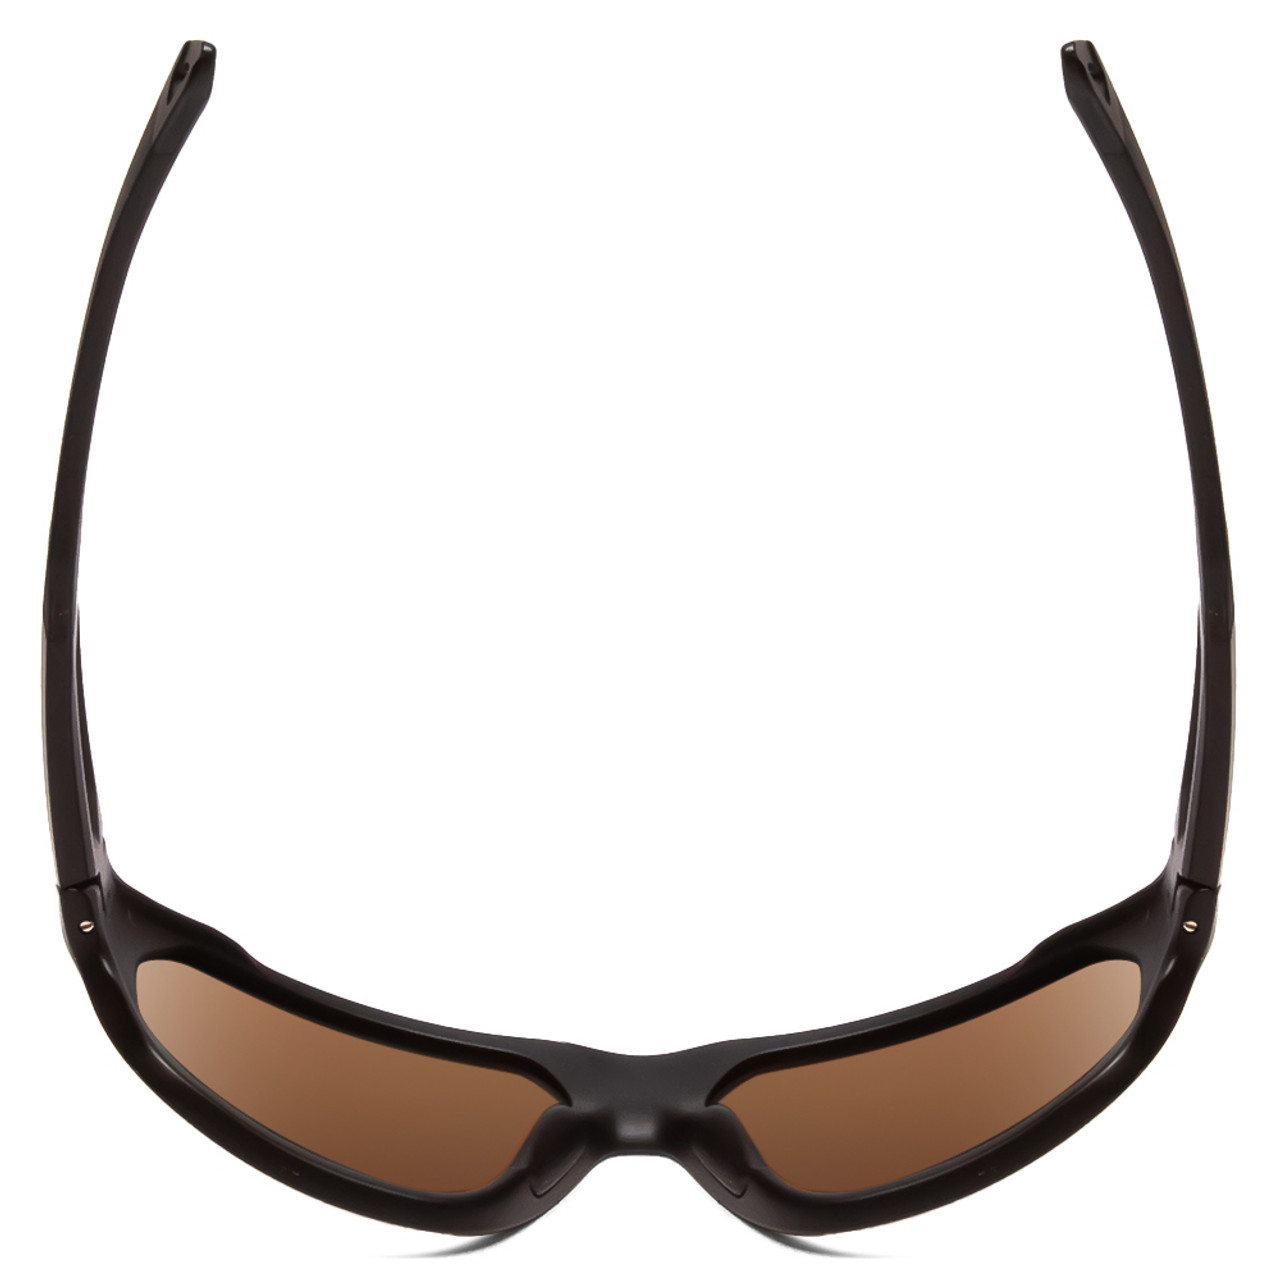 Smith Deckboss Unisex Rectangle Sunglasses in Black/CP Polarized Gray Green 63mm